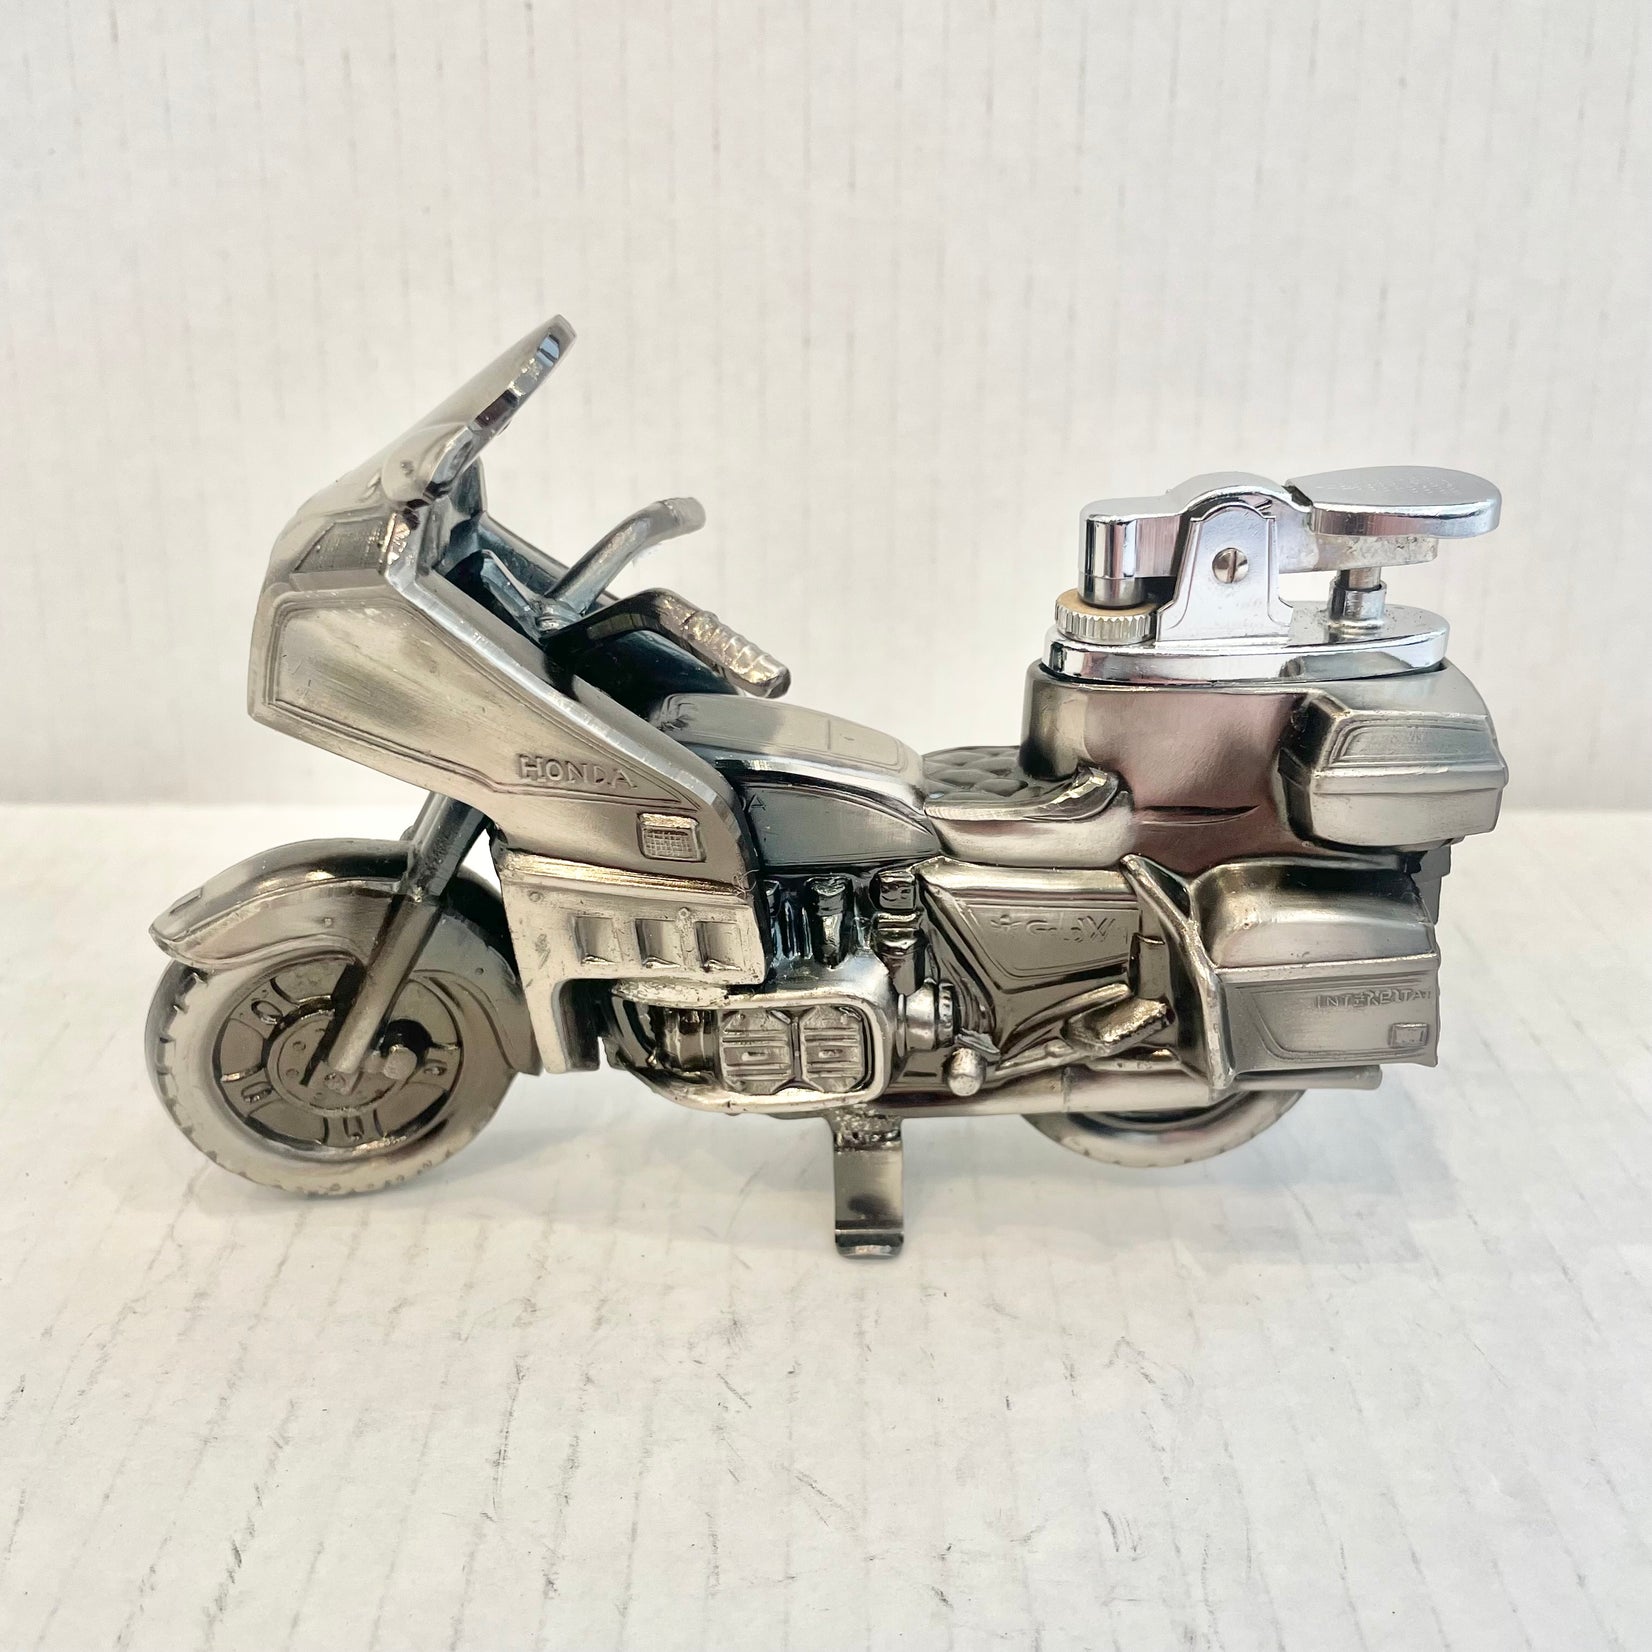 Honda Gold Wing Motorcycle Lighter, 1980s Japan